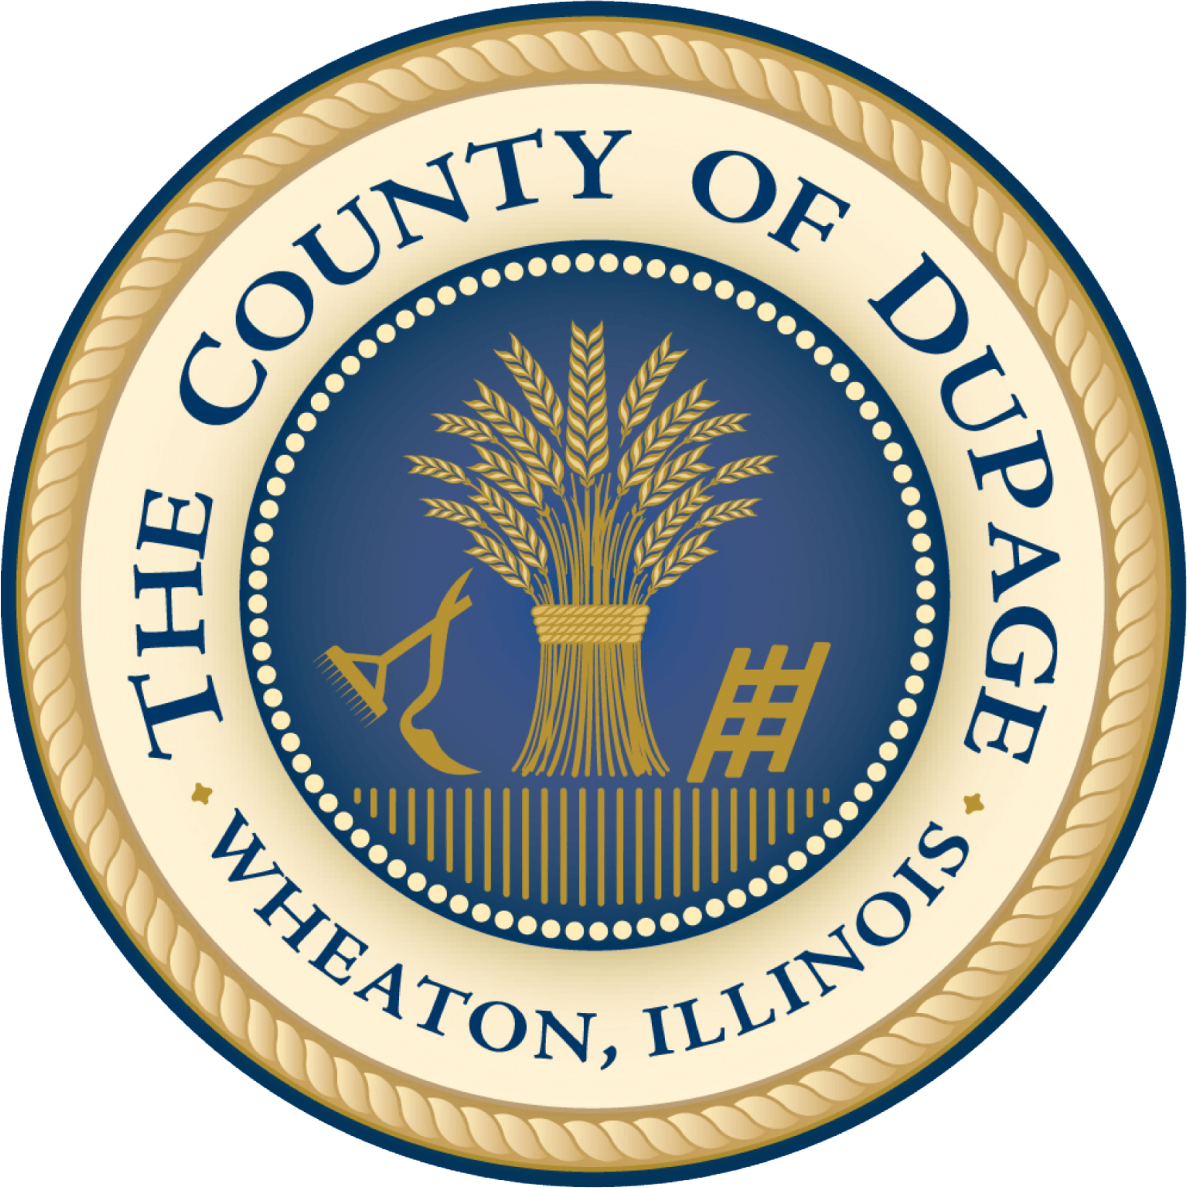 The County of DuPage Wheaton, Illinois